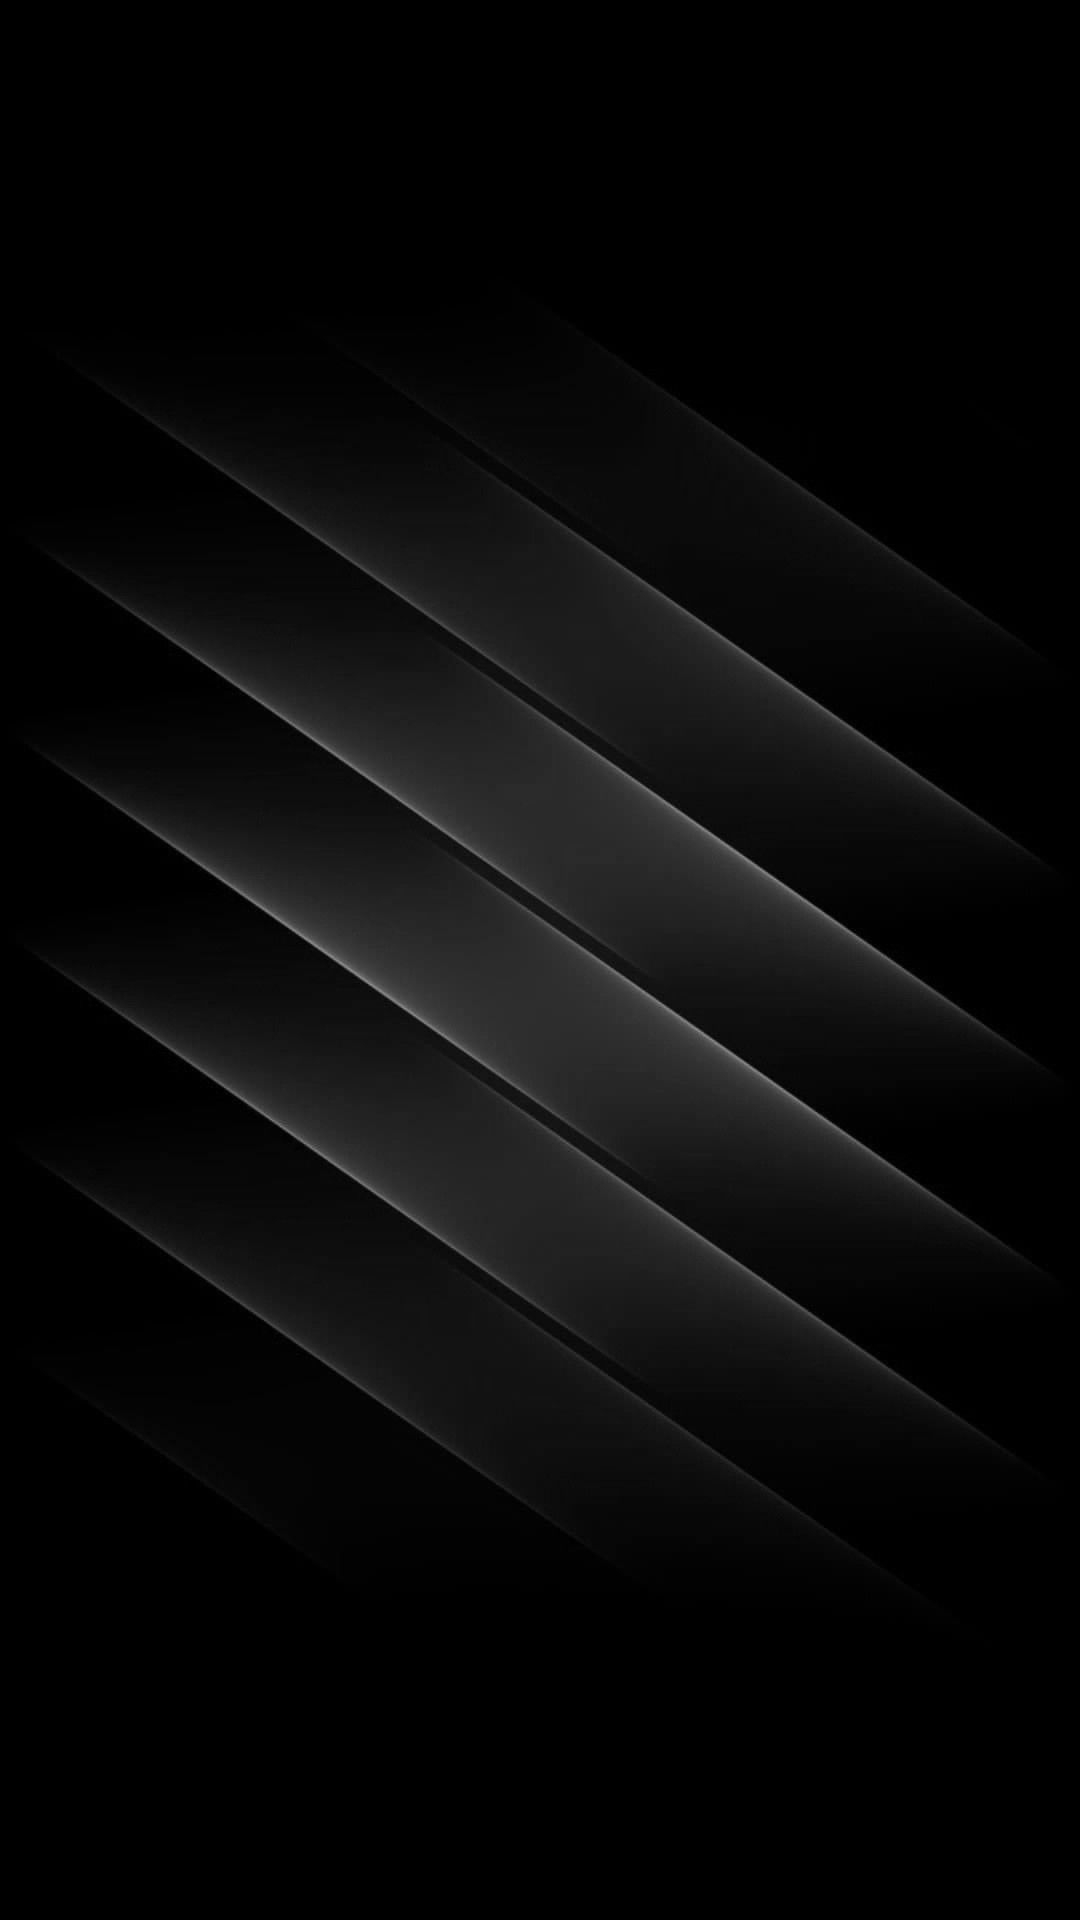 1080x1920 Pin by Garik Push on Black | Black phone wallpaper, Black wallpaper, Dark wallpaper